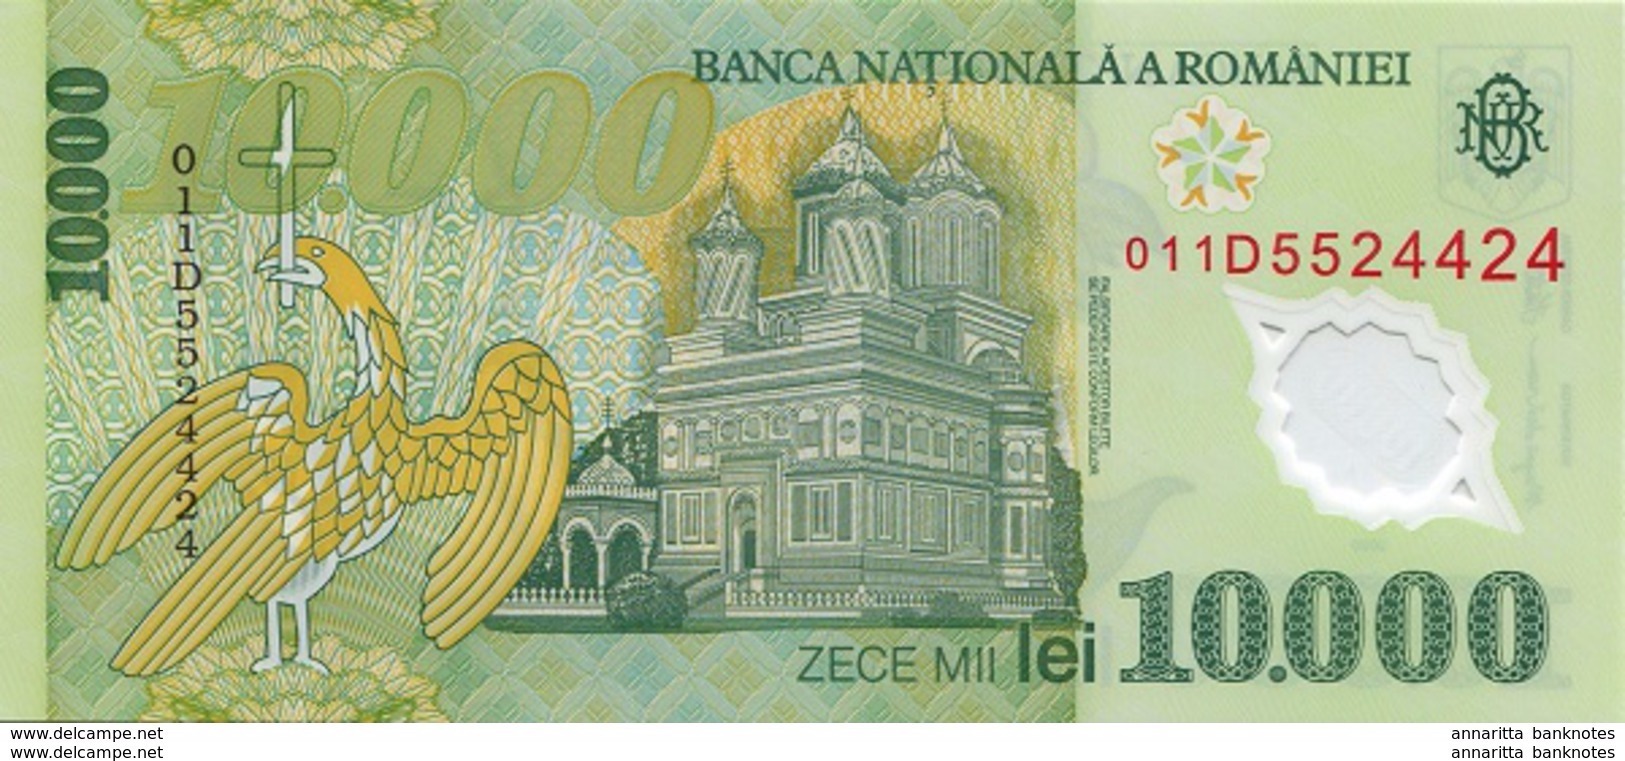 ROMANIA 10000 LEI 2000 (2001) P-112b UNC PREFIX 01 [RO273b] - Roumanie